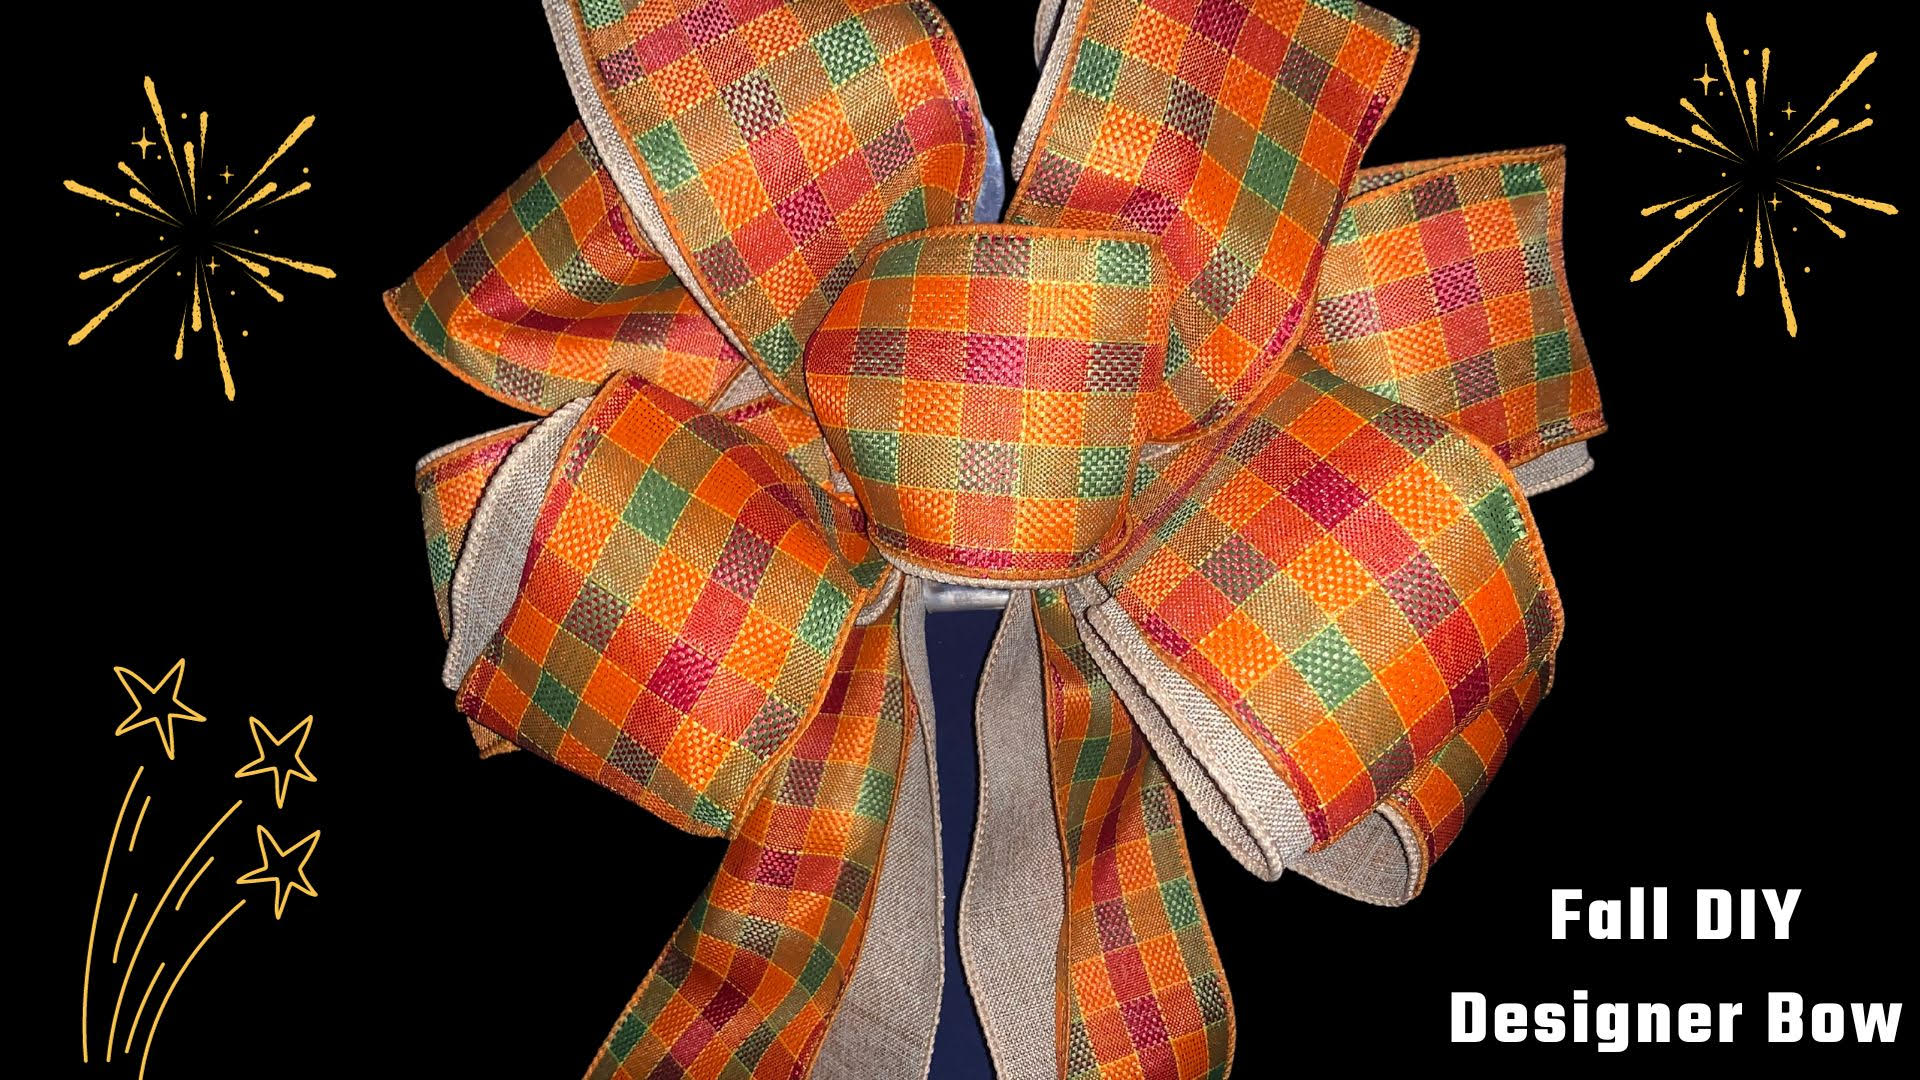 Bowdabra All In One Patriotic Ribbon Kit Online For DIY Bows